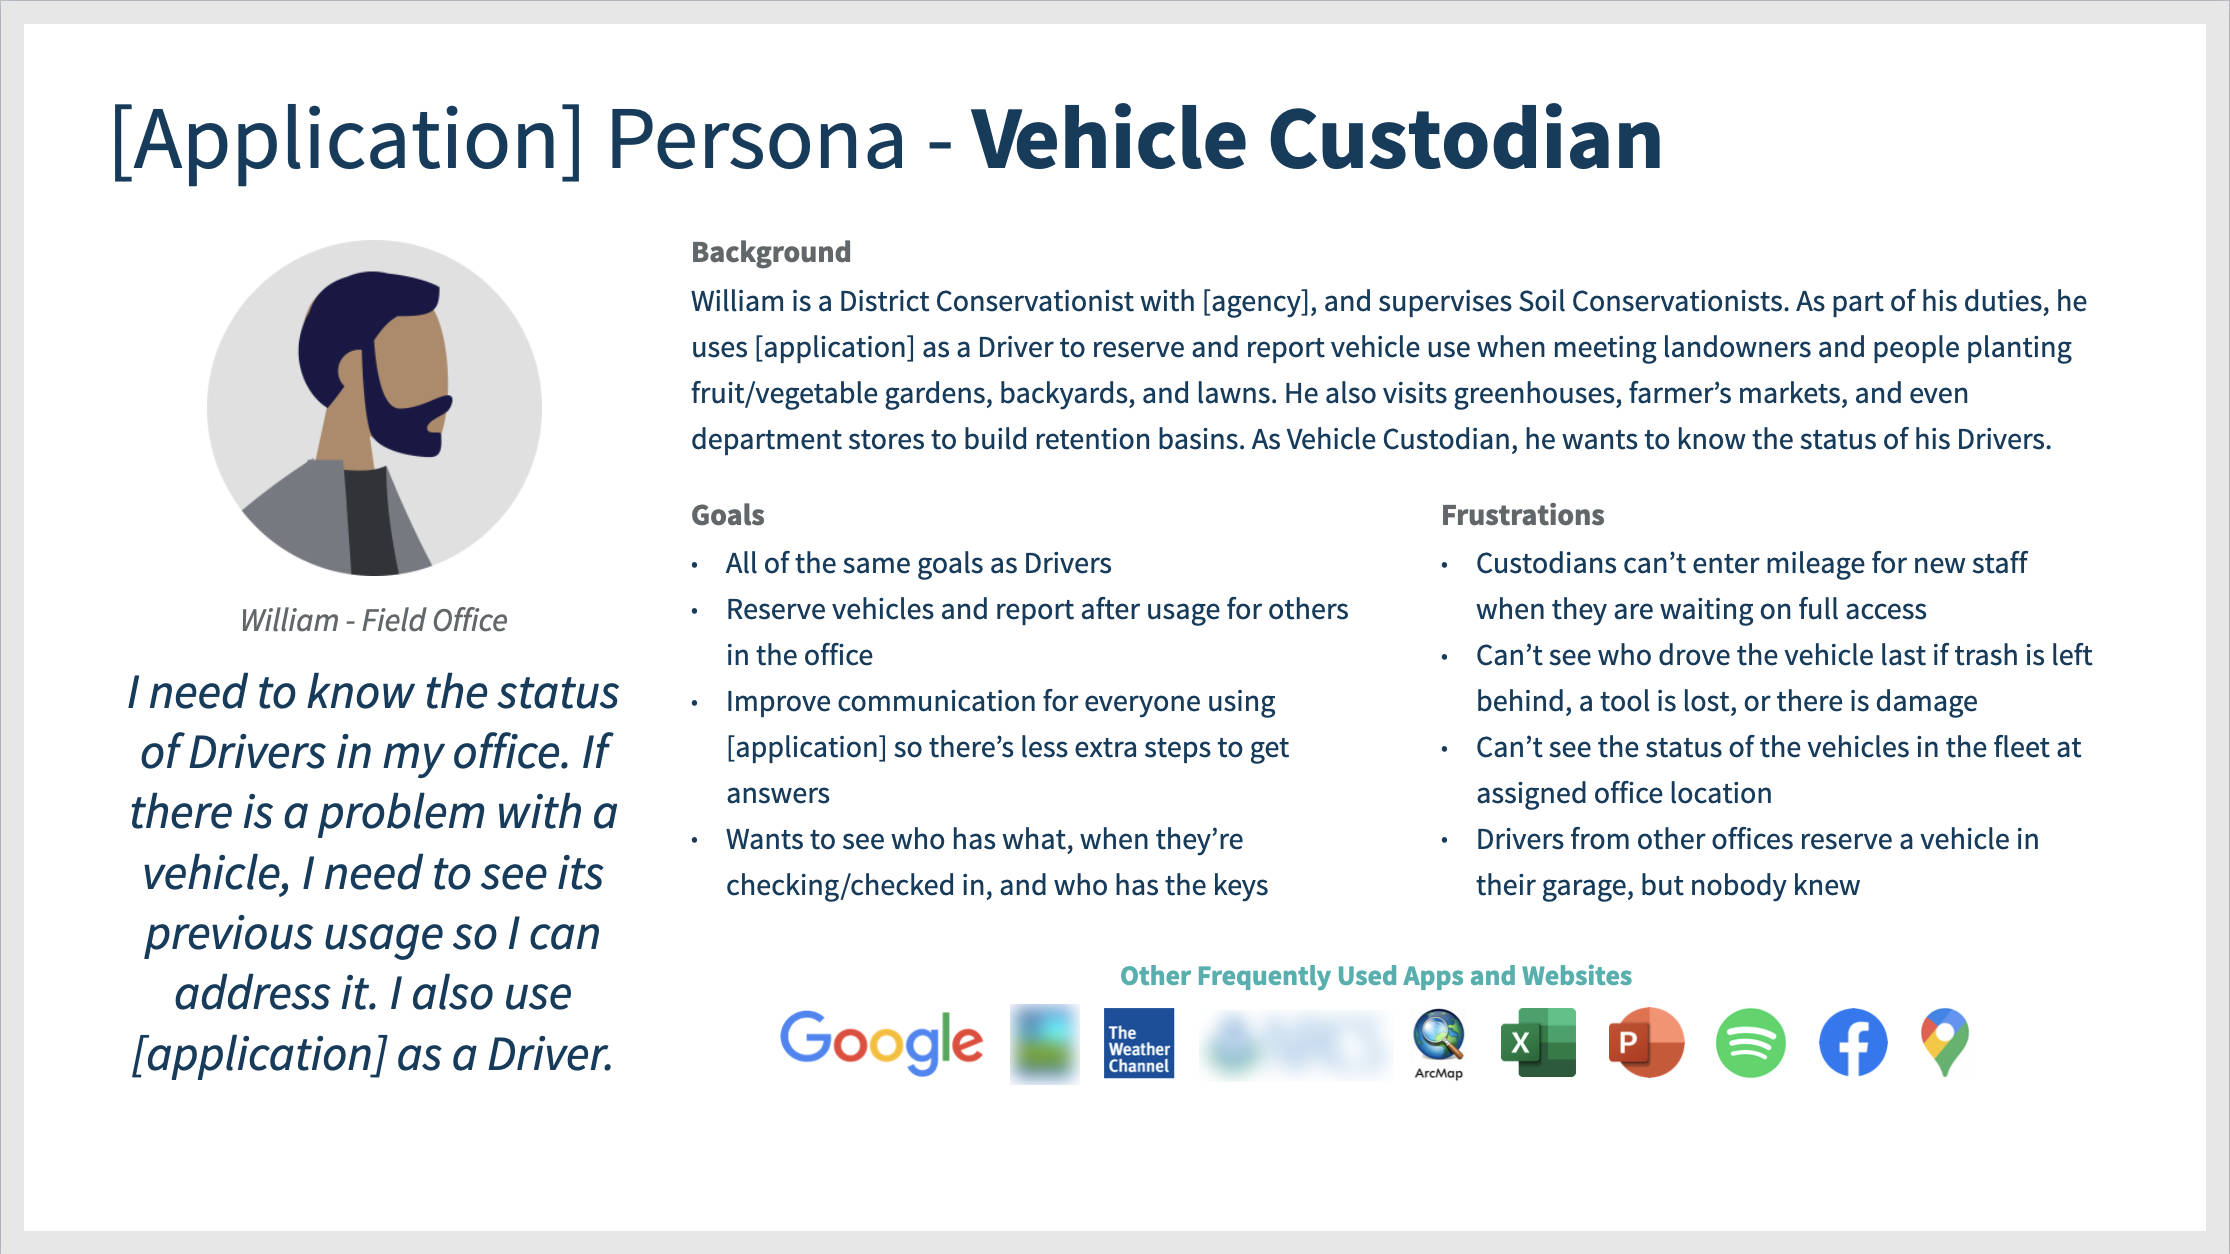 Persona: Vehicle Custodian